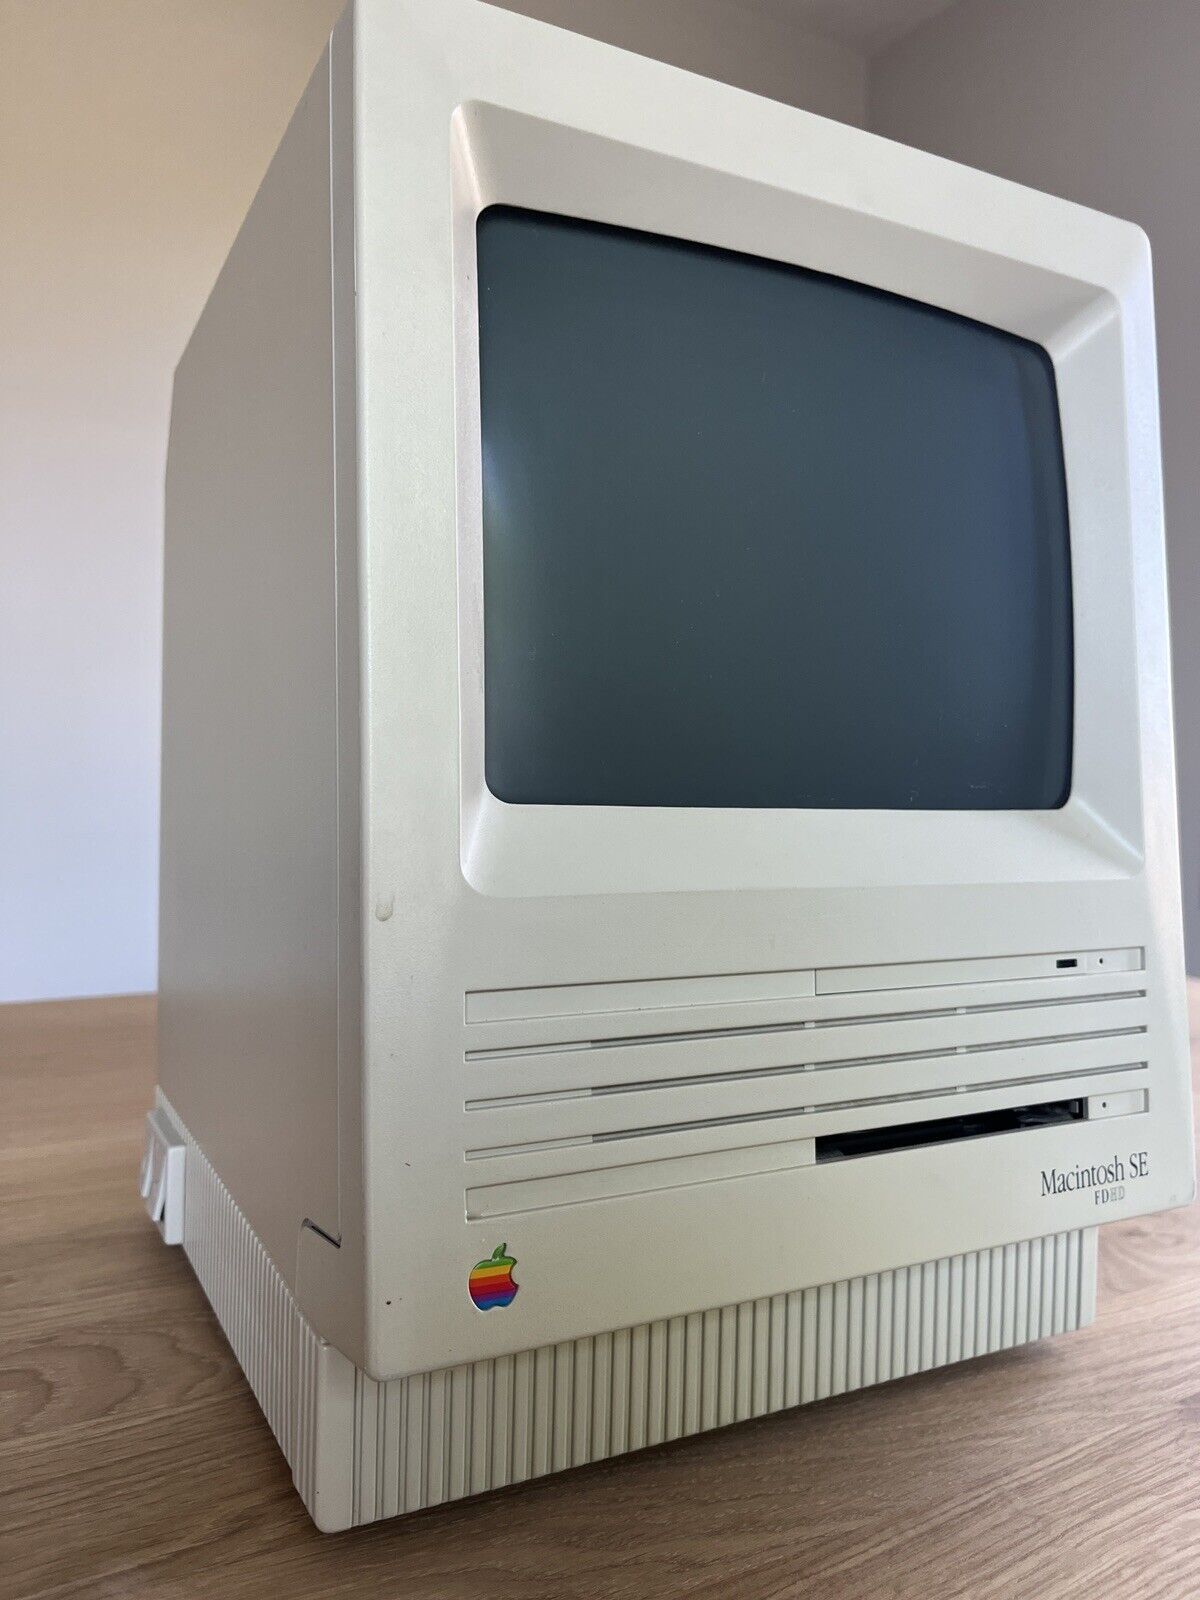 Working - Apple Macintosh SE M5011 Vintage Computer (Includes Keyboard & Mouse)